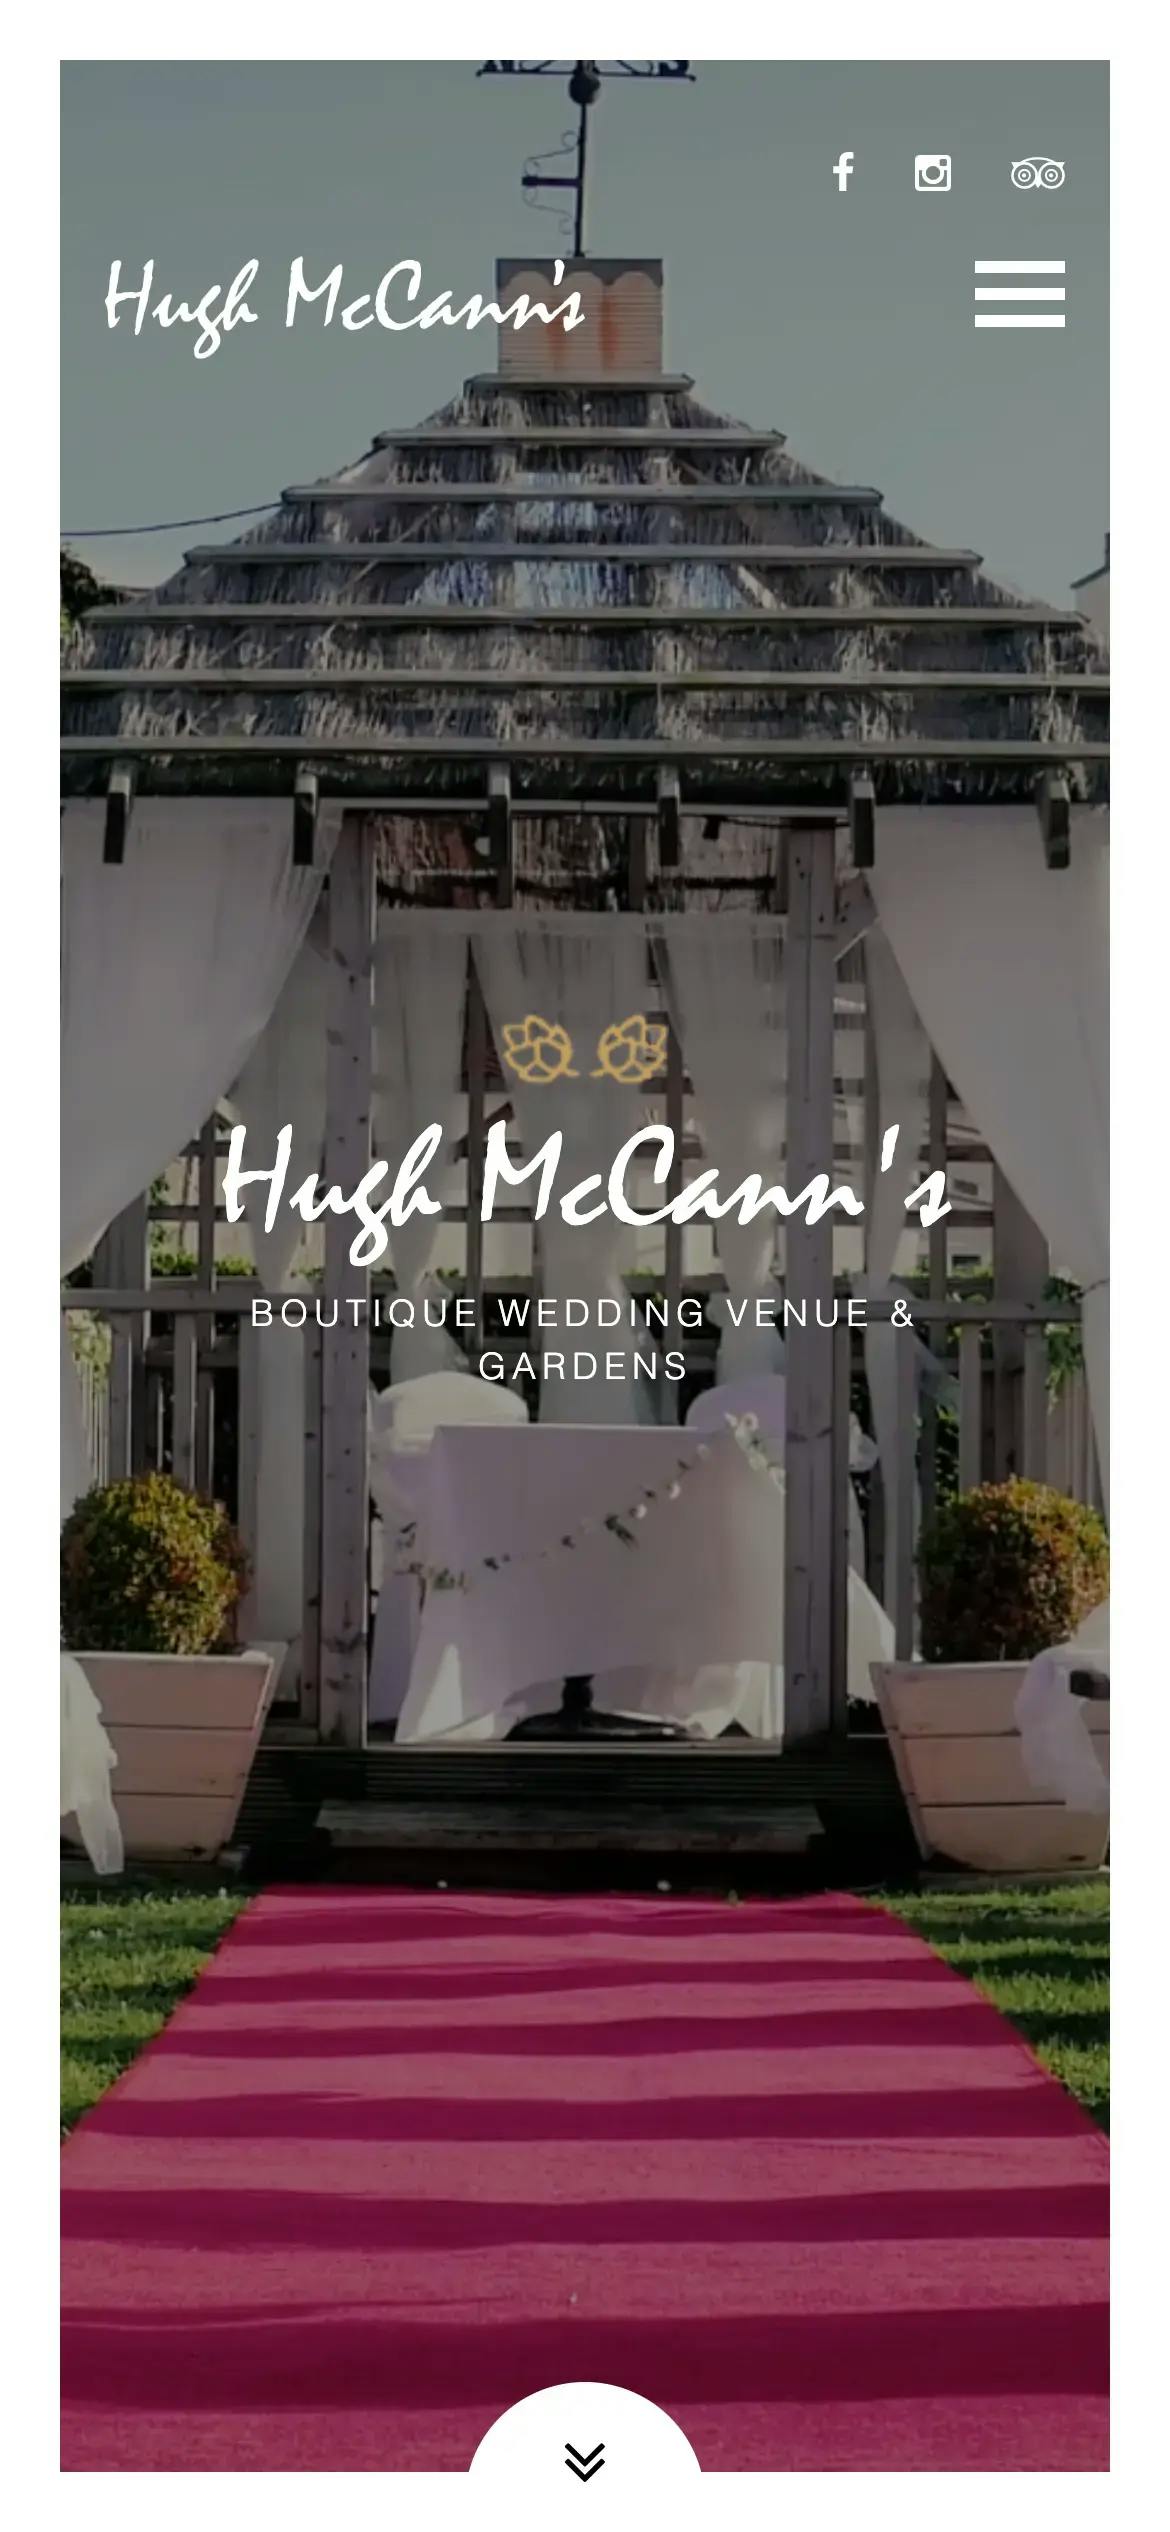 Hugh McCann's home page web design on mobile